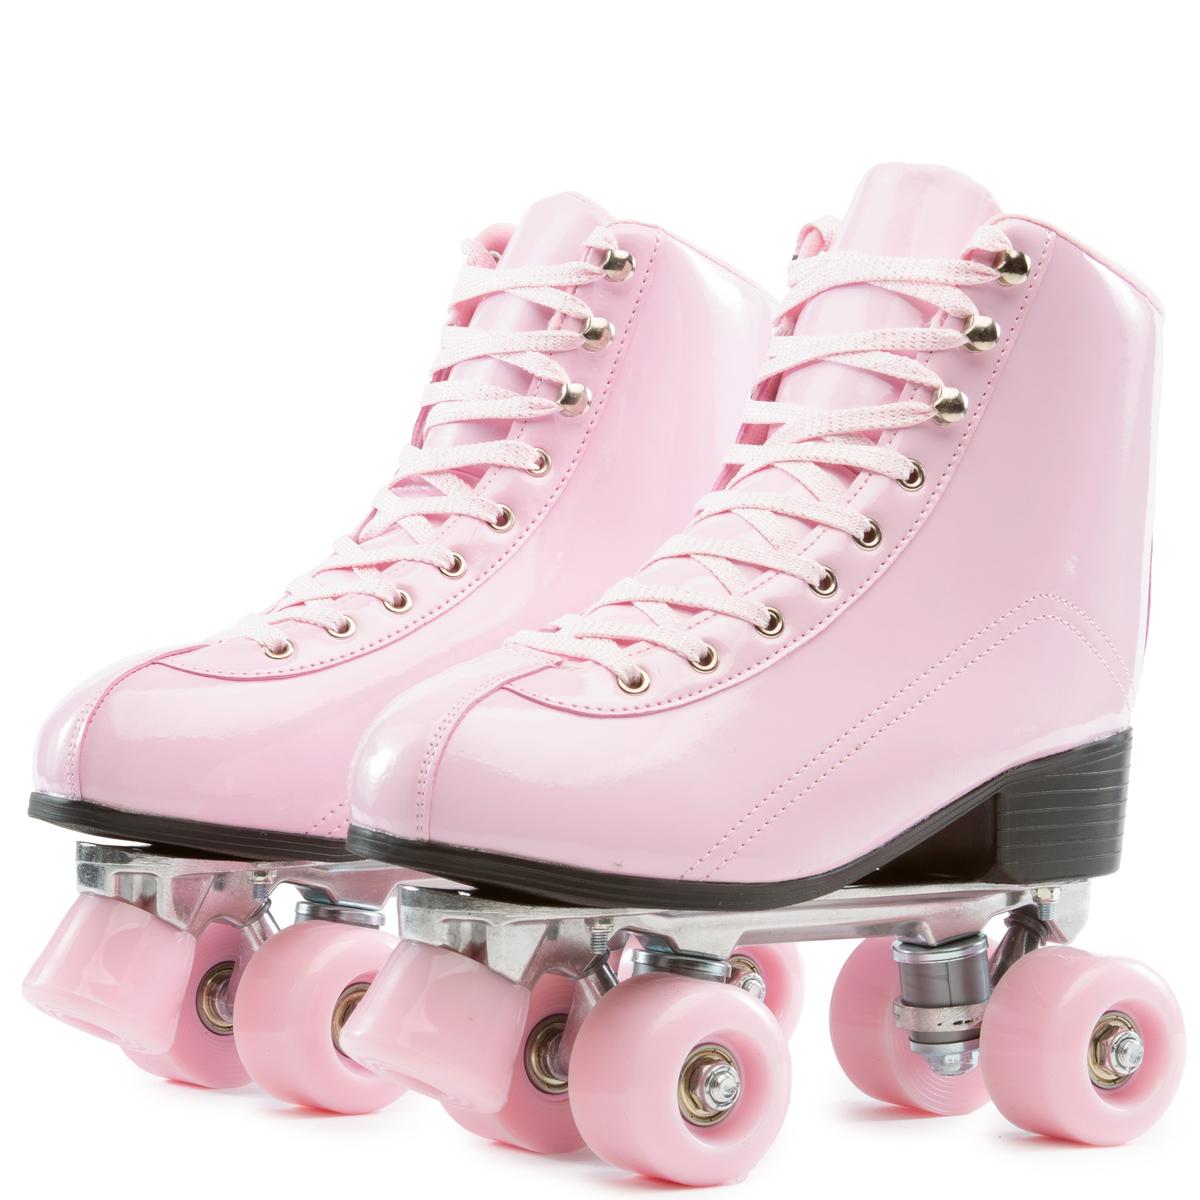 Archie-20 Lace-Up Roller Skates